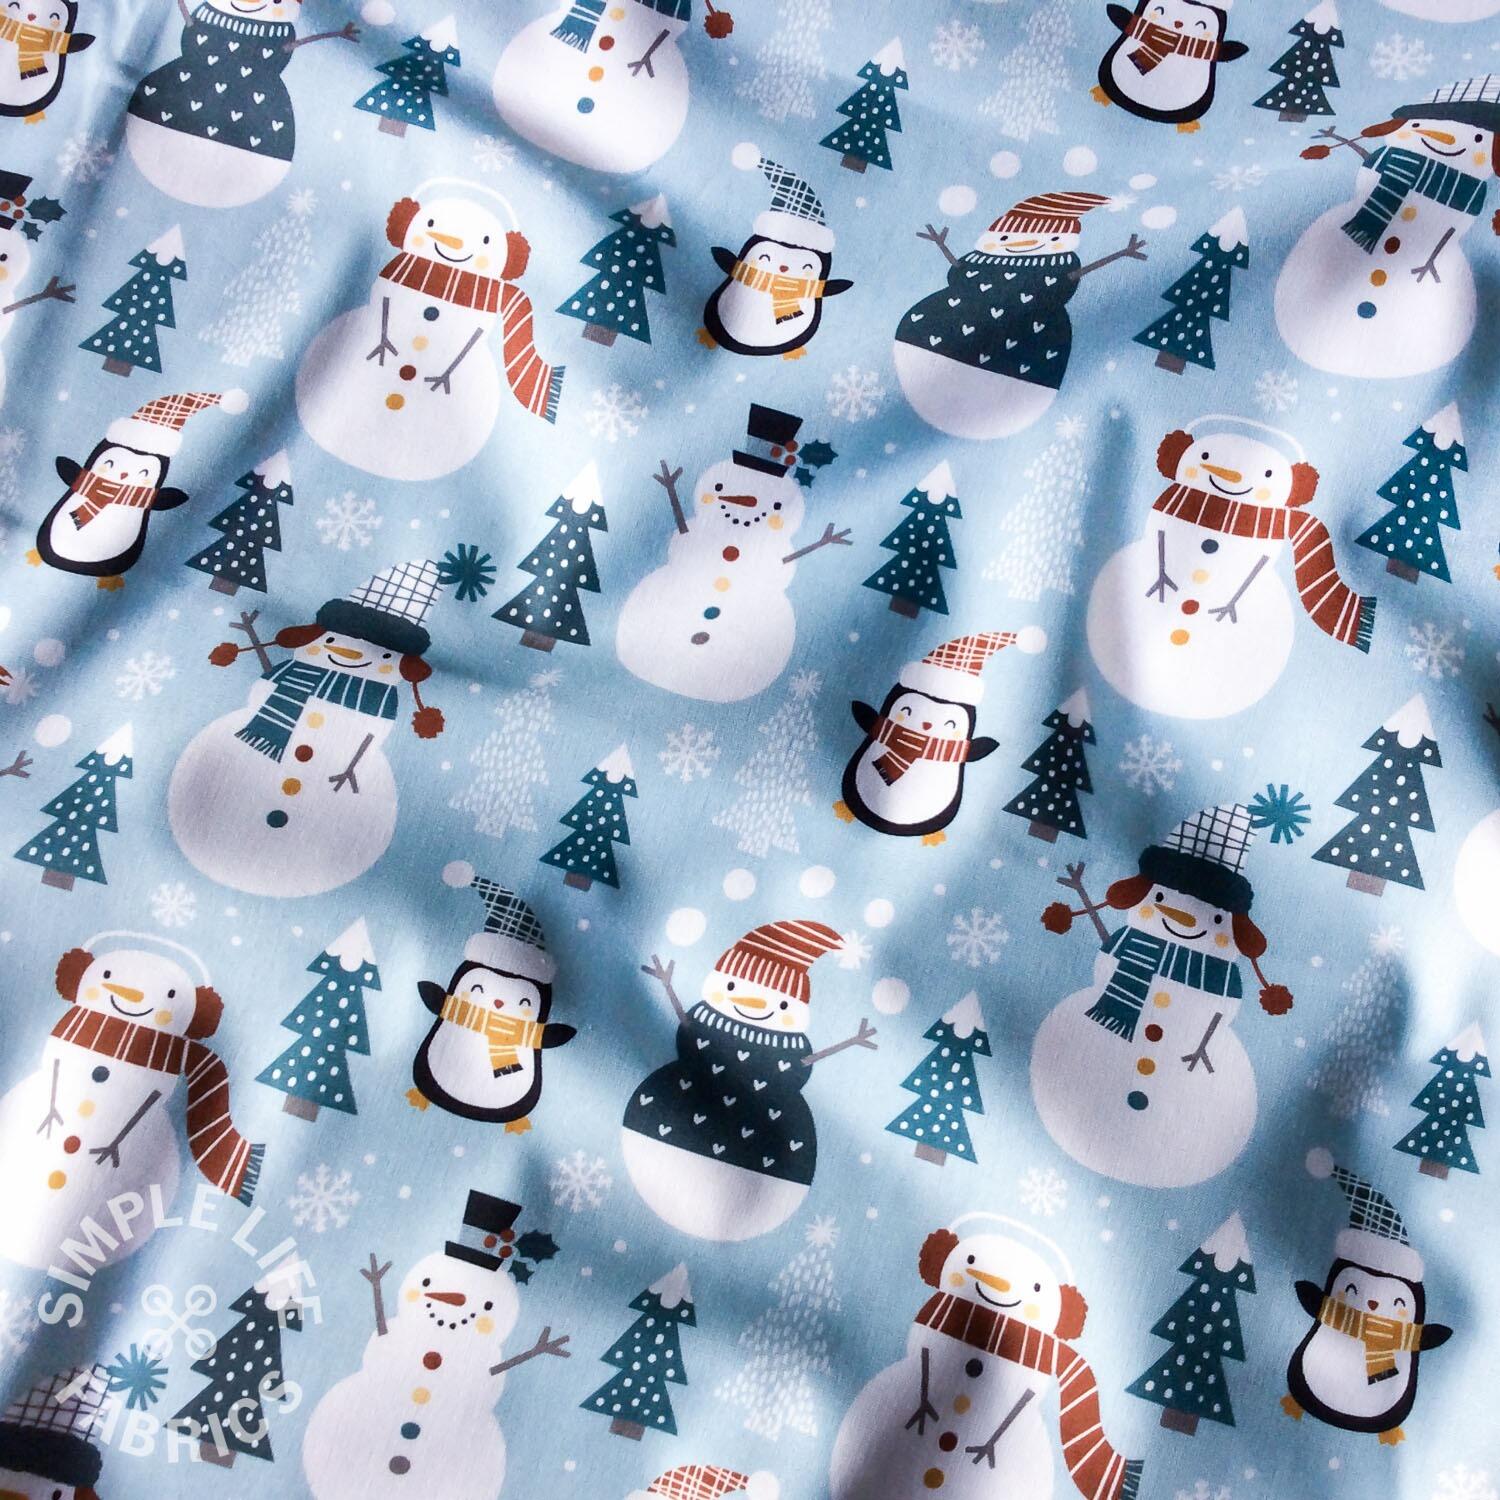 Snowmen and penguins Christmas cotton fabric